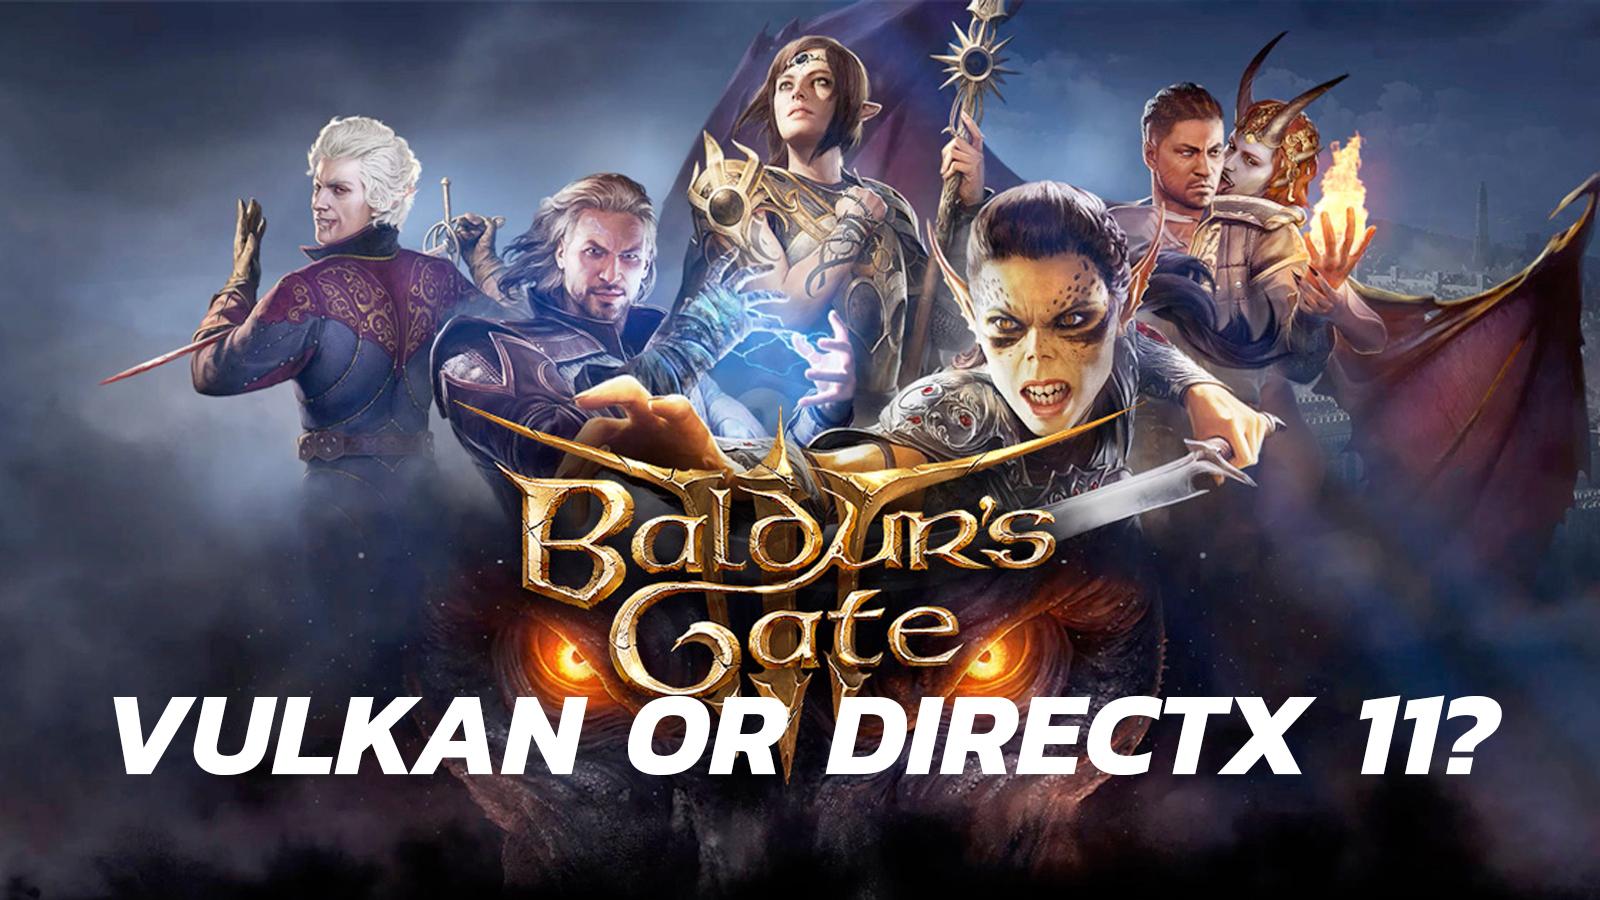 Baldur's Gate 3 key art with Vulkan or DirectX 11 over the top